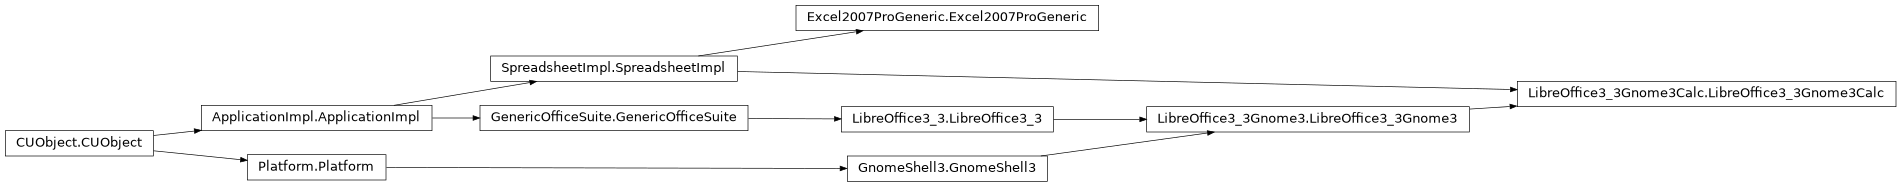 Inheritance diagram of SpreadsheetImpl.SpreadsheetImpl, Excel2007ProGeneric.Excel2007ProGeneric, LibreOffice3_3Gnome3Calc.LibreOffice3_3Gnome3Calc